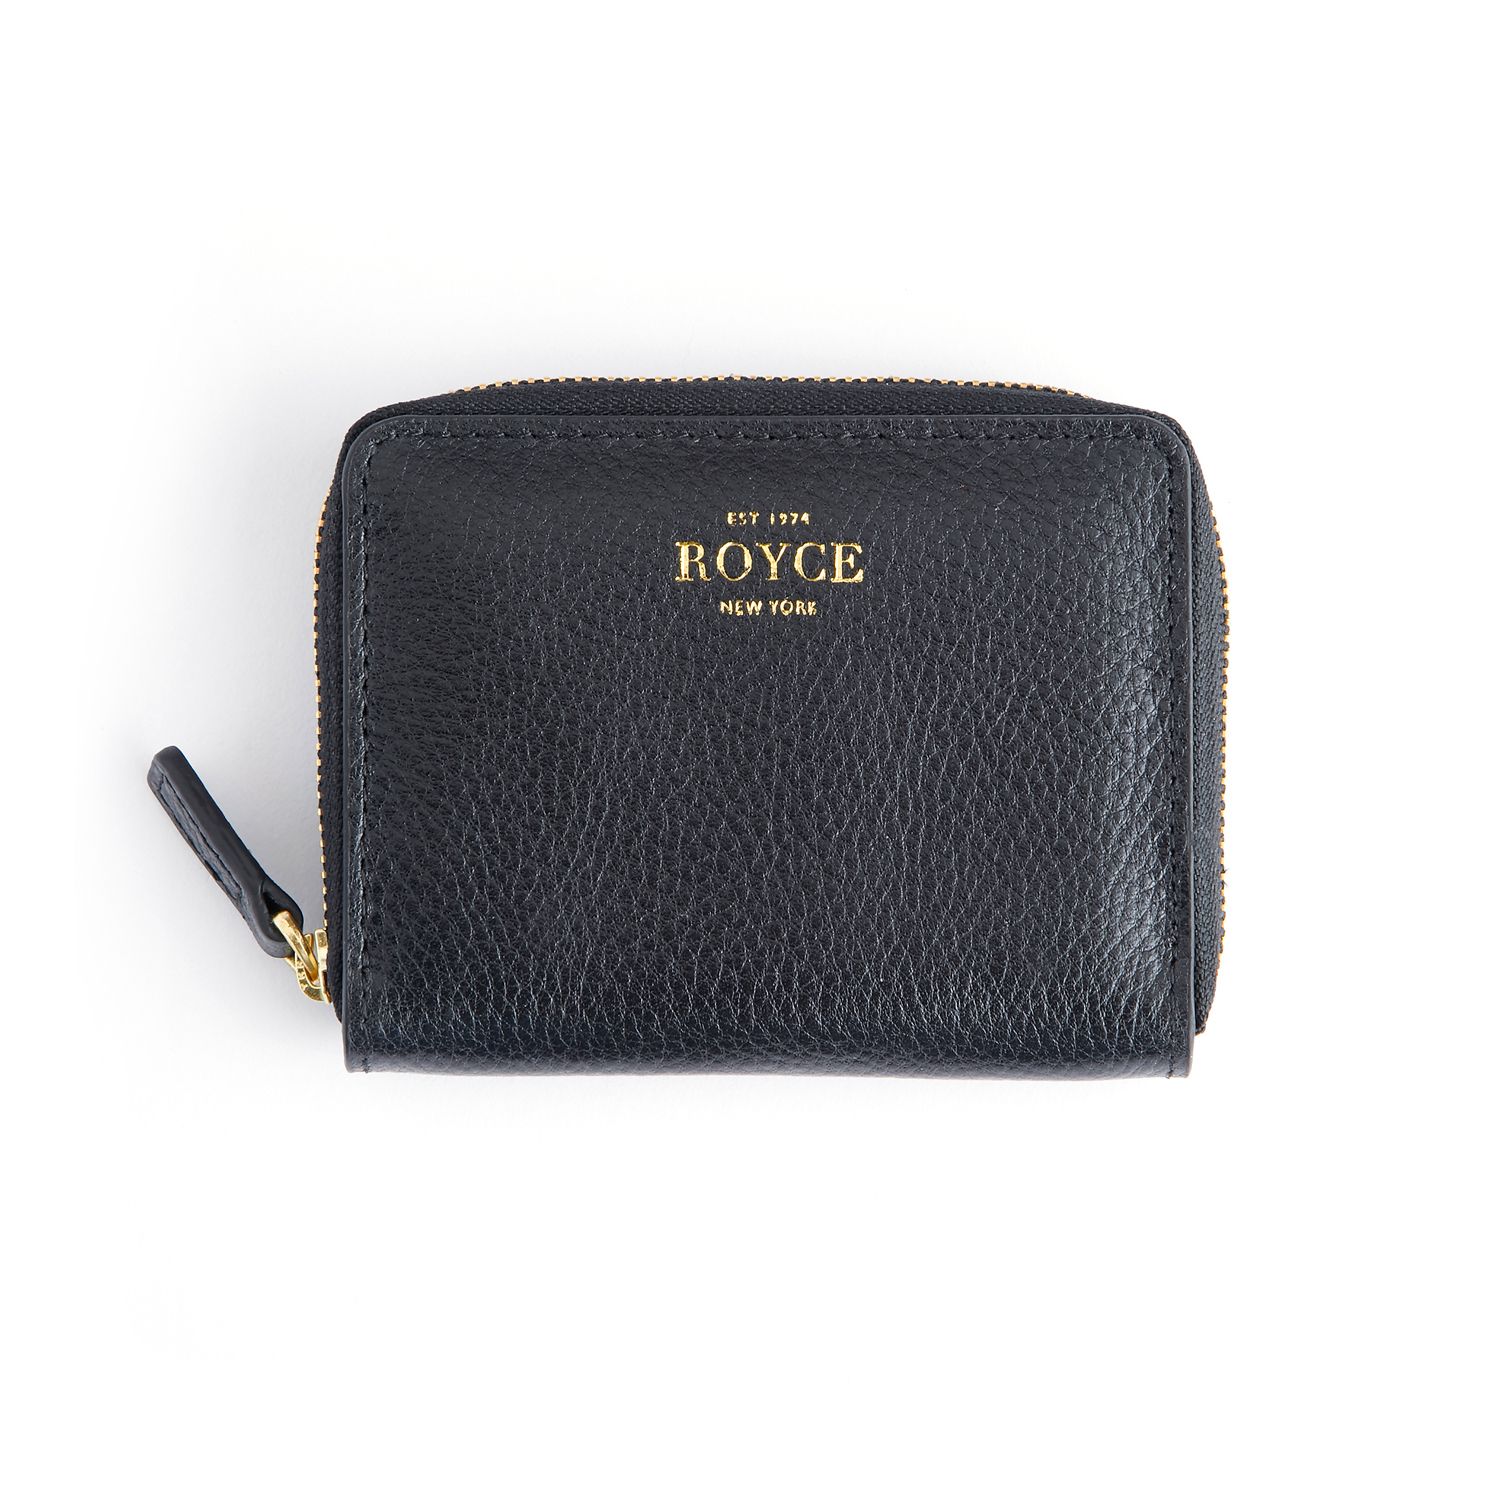 Royce New York Leather Valet Key Chain - Black